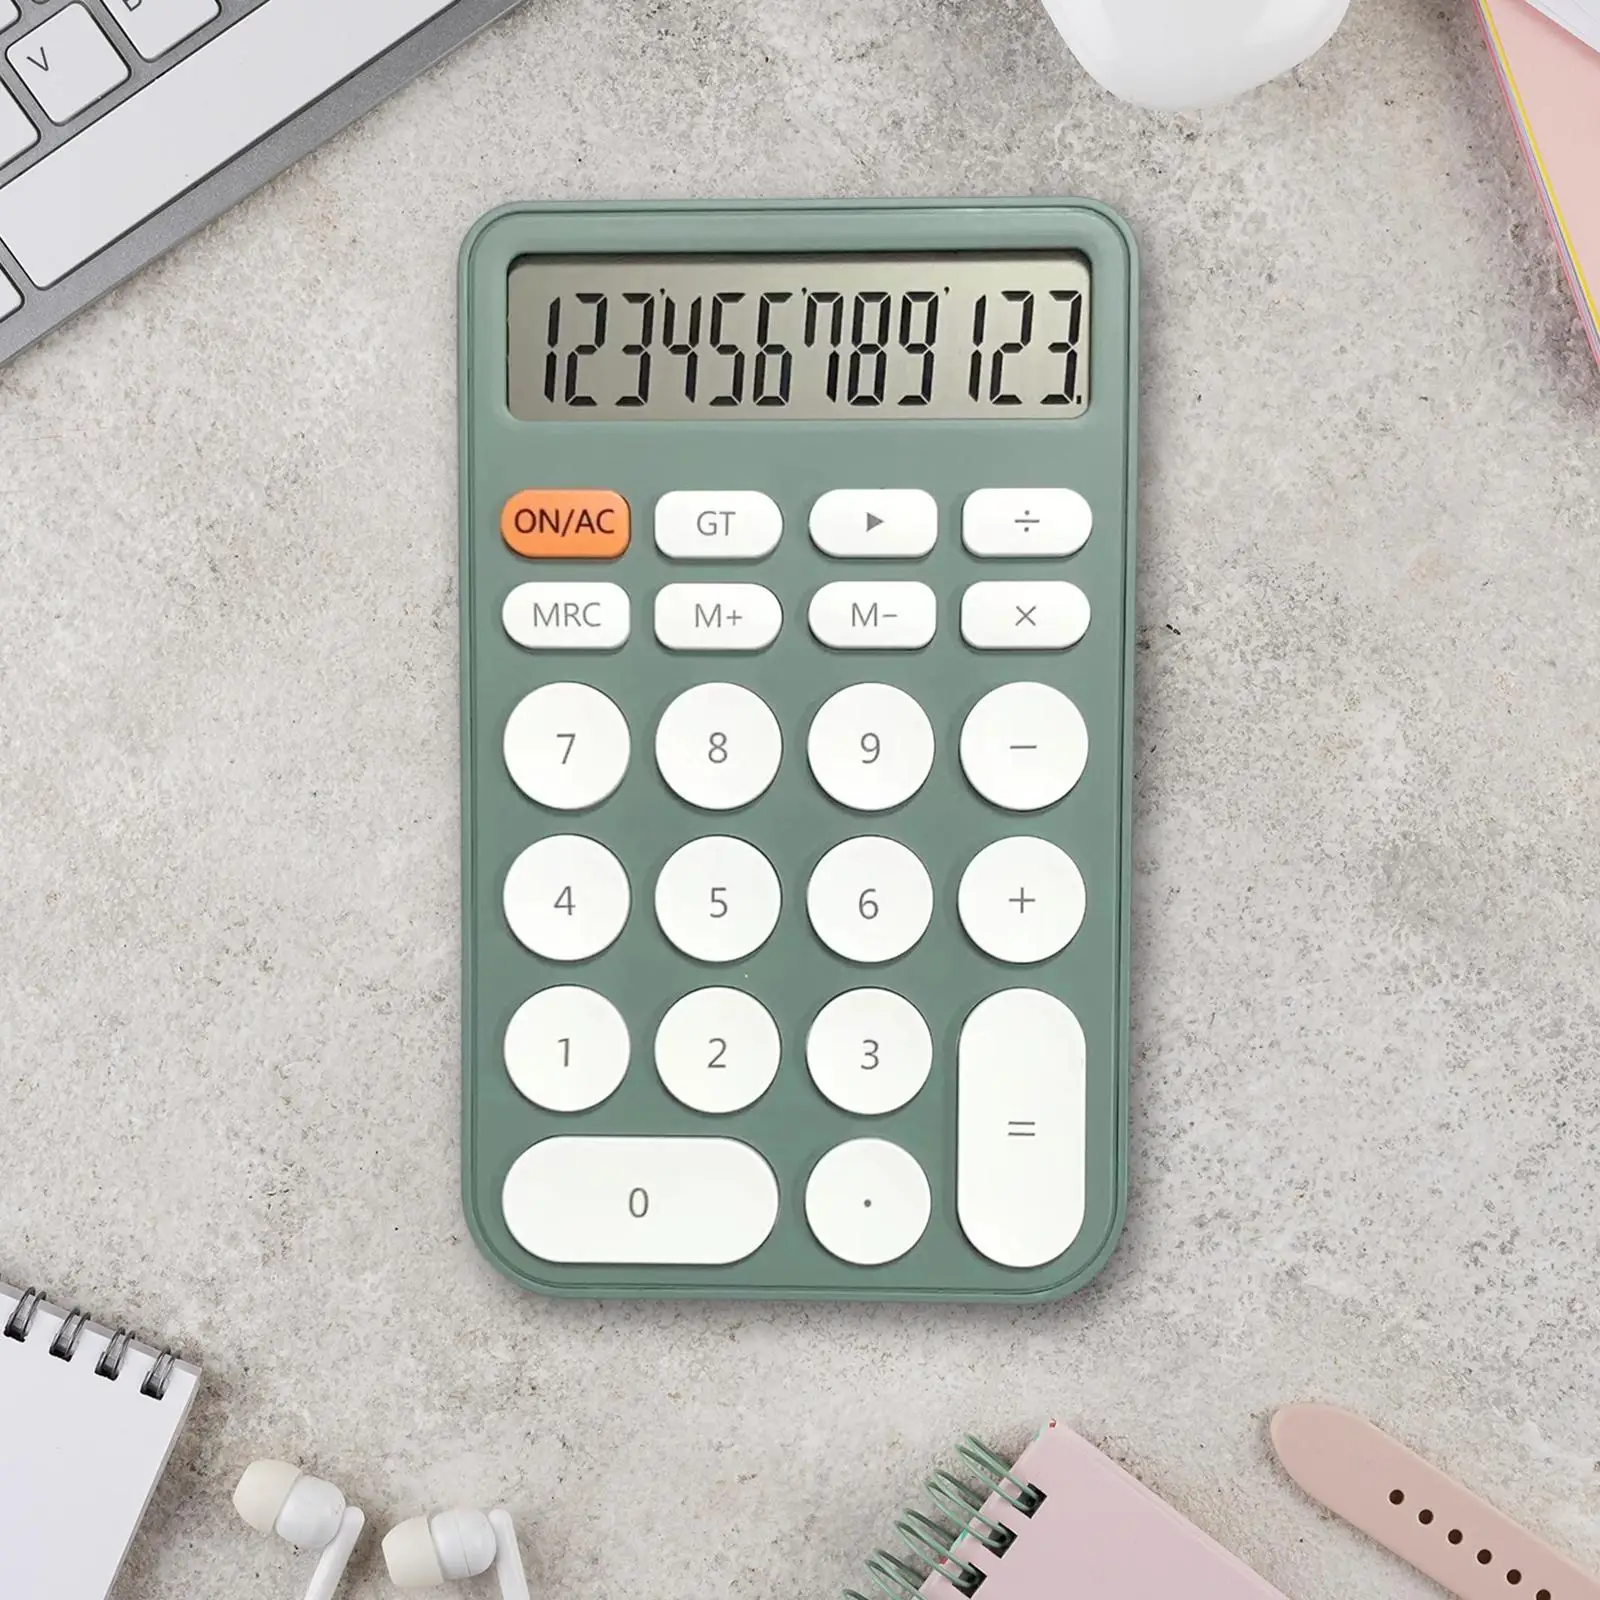 Standard Calculator Financial Calculator 12 Digit Large LCD Display Mini Desk Calculator Office Calculator for Business Use Home